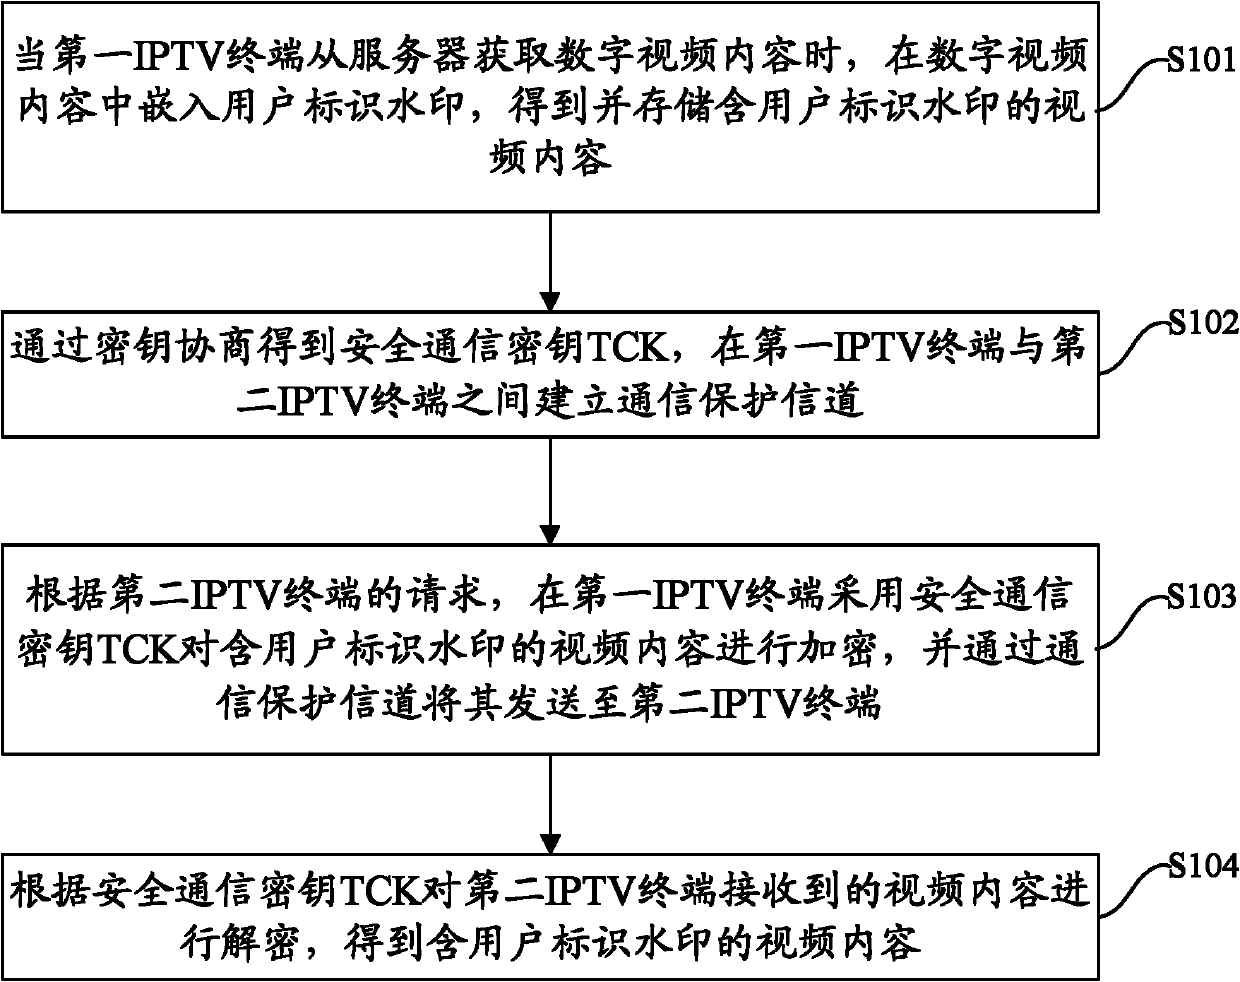 Digital-watermark-based digital copyright management method and device for IPTV terminals